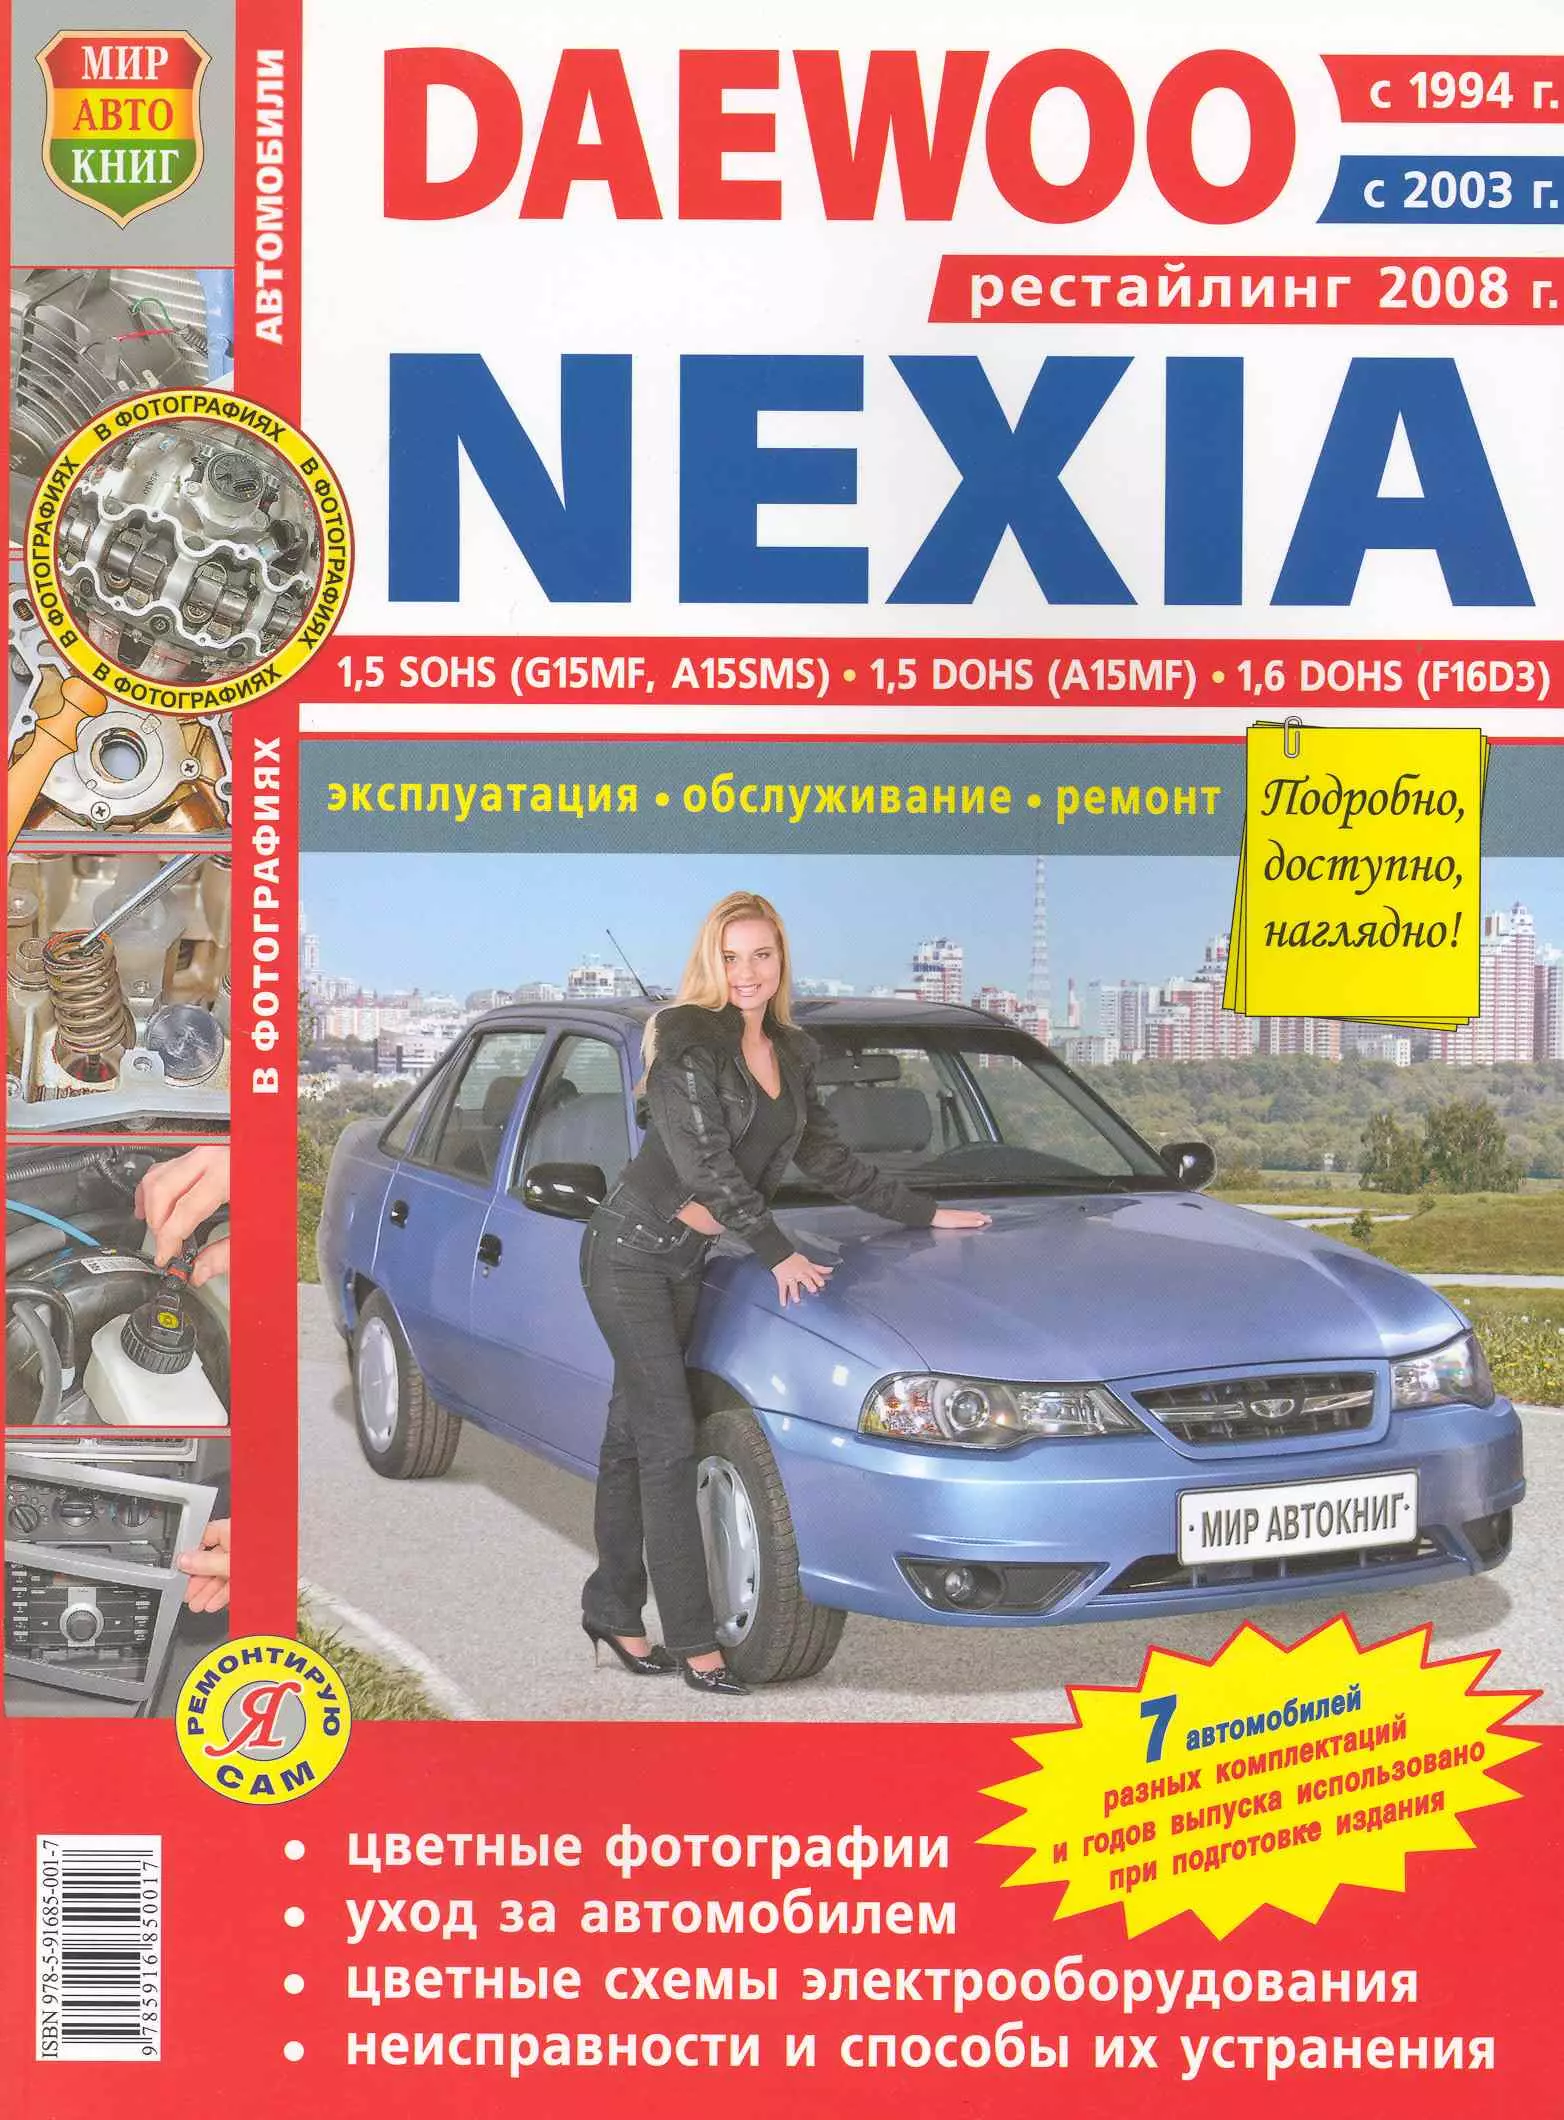  - Daewoo Nexia рестайлинг с 2008 г.в цв. фото